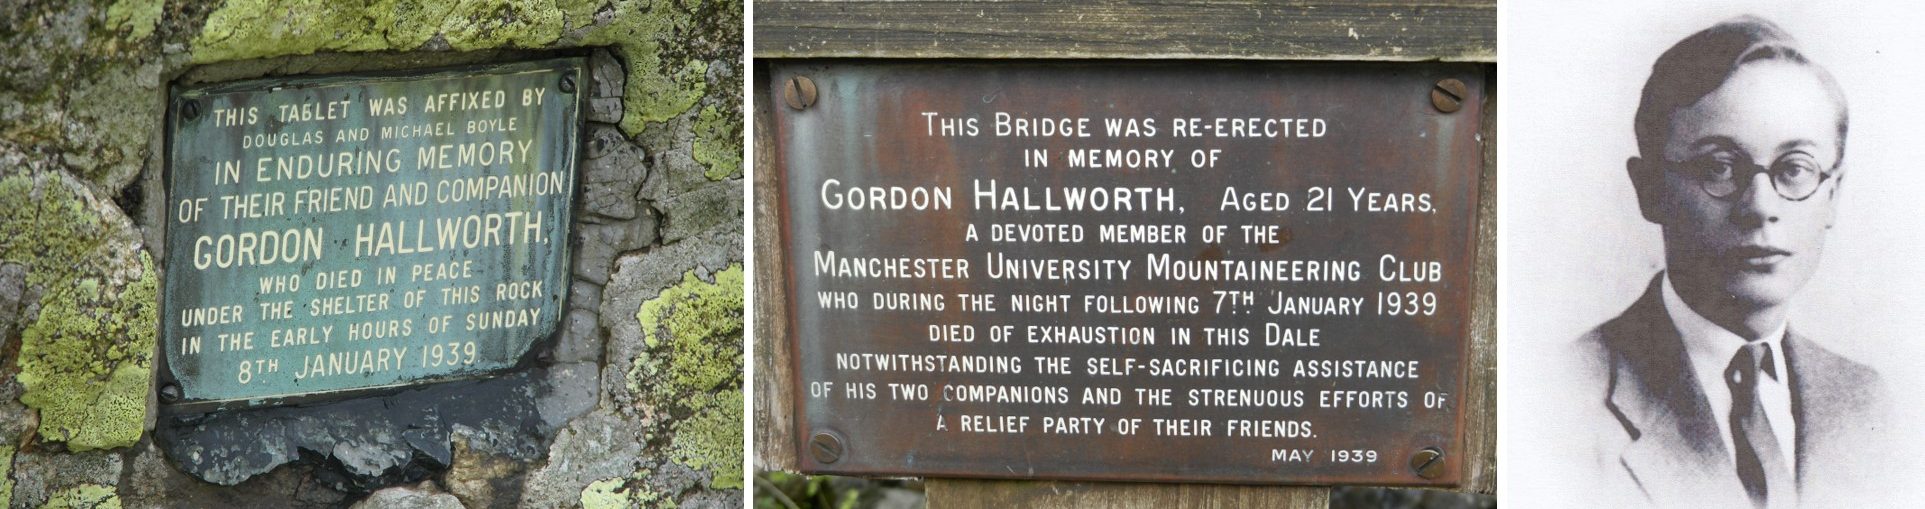 The Story of Gordon Hallworth